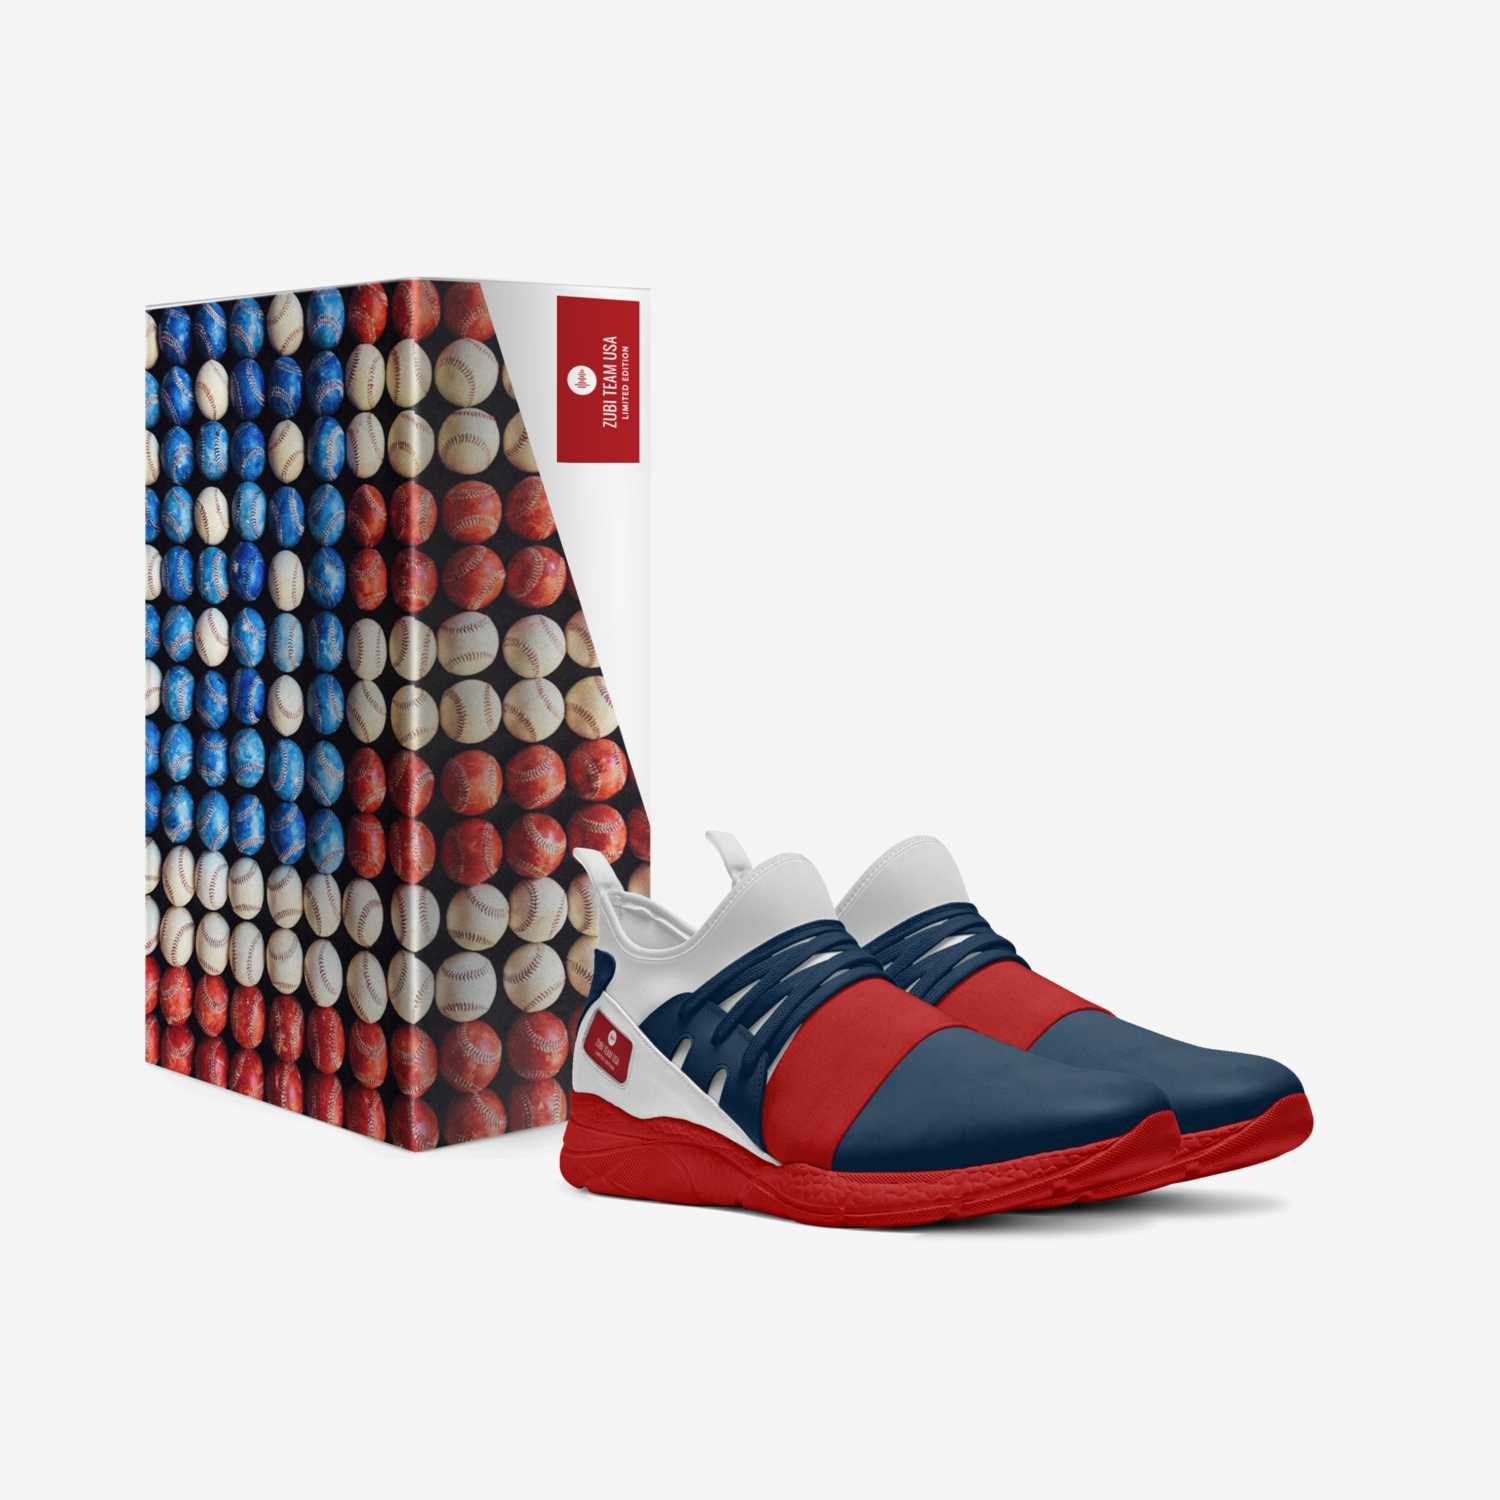 ZUBI Team USA custom made in Italy shoes by Carlos Zubizarreta | Box view